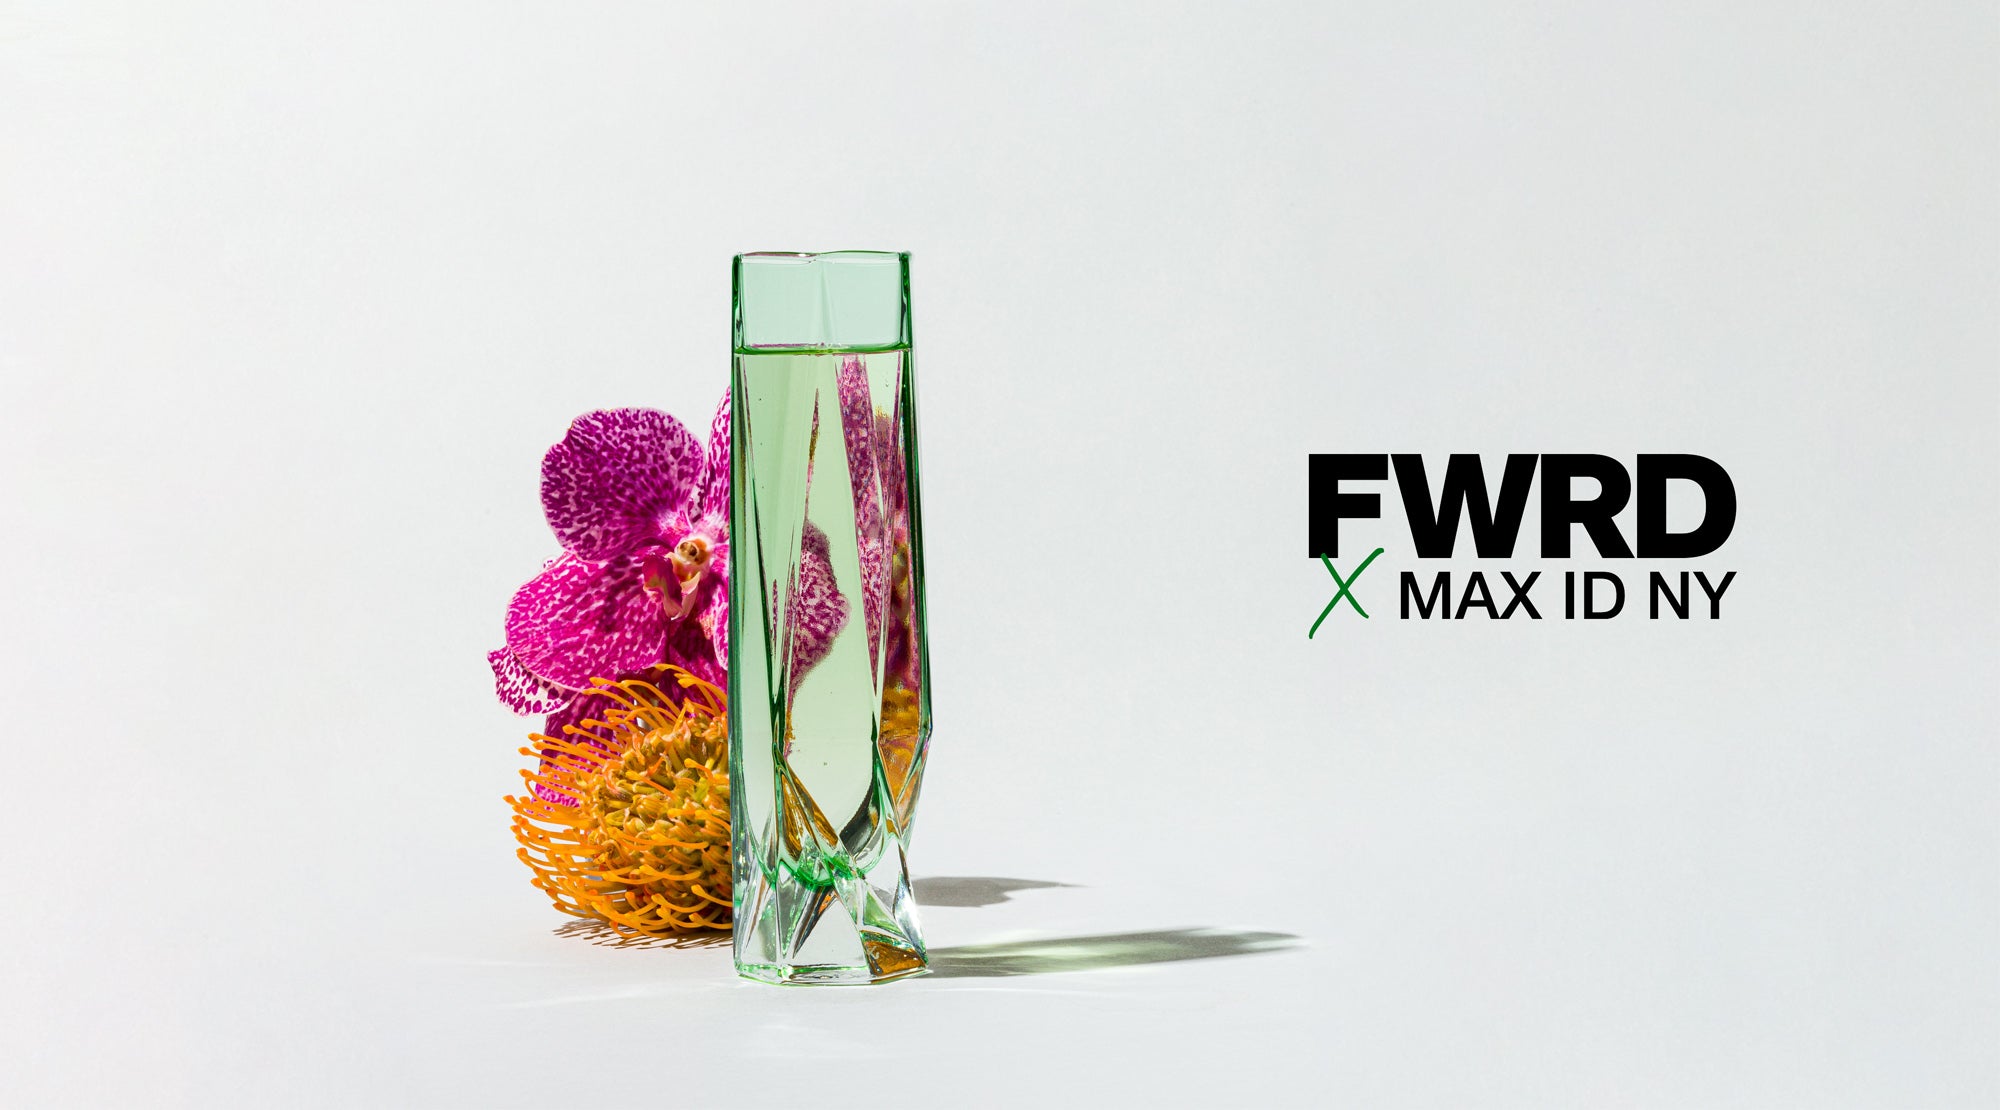 FWRD x MAX ID NY